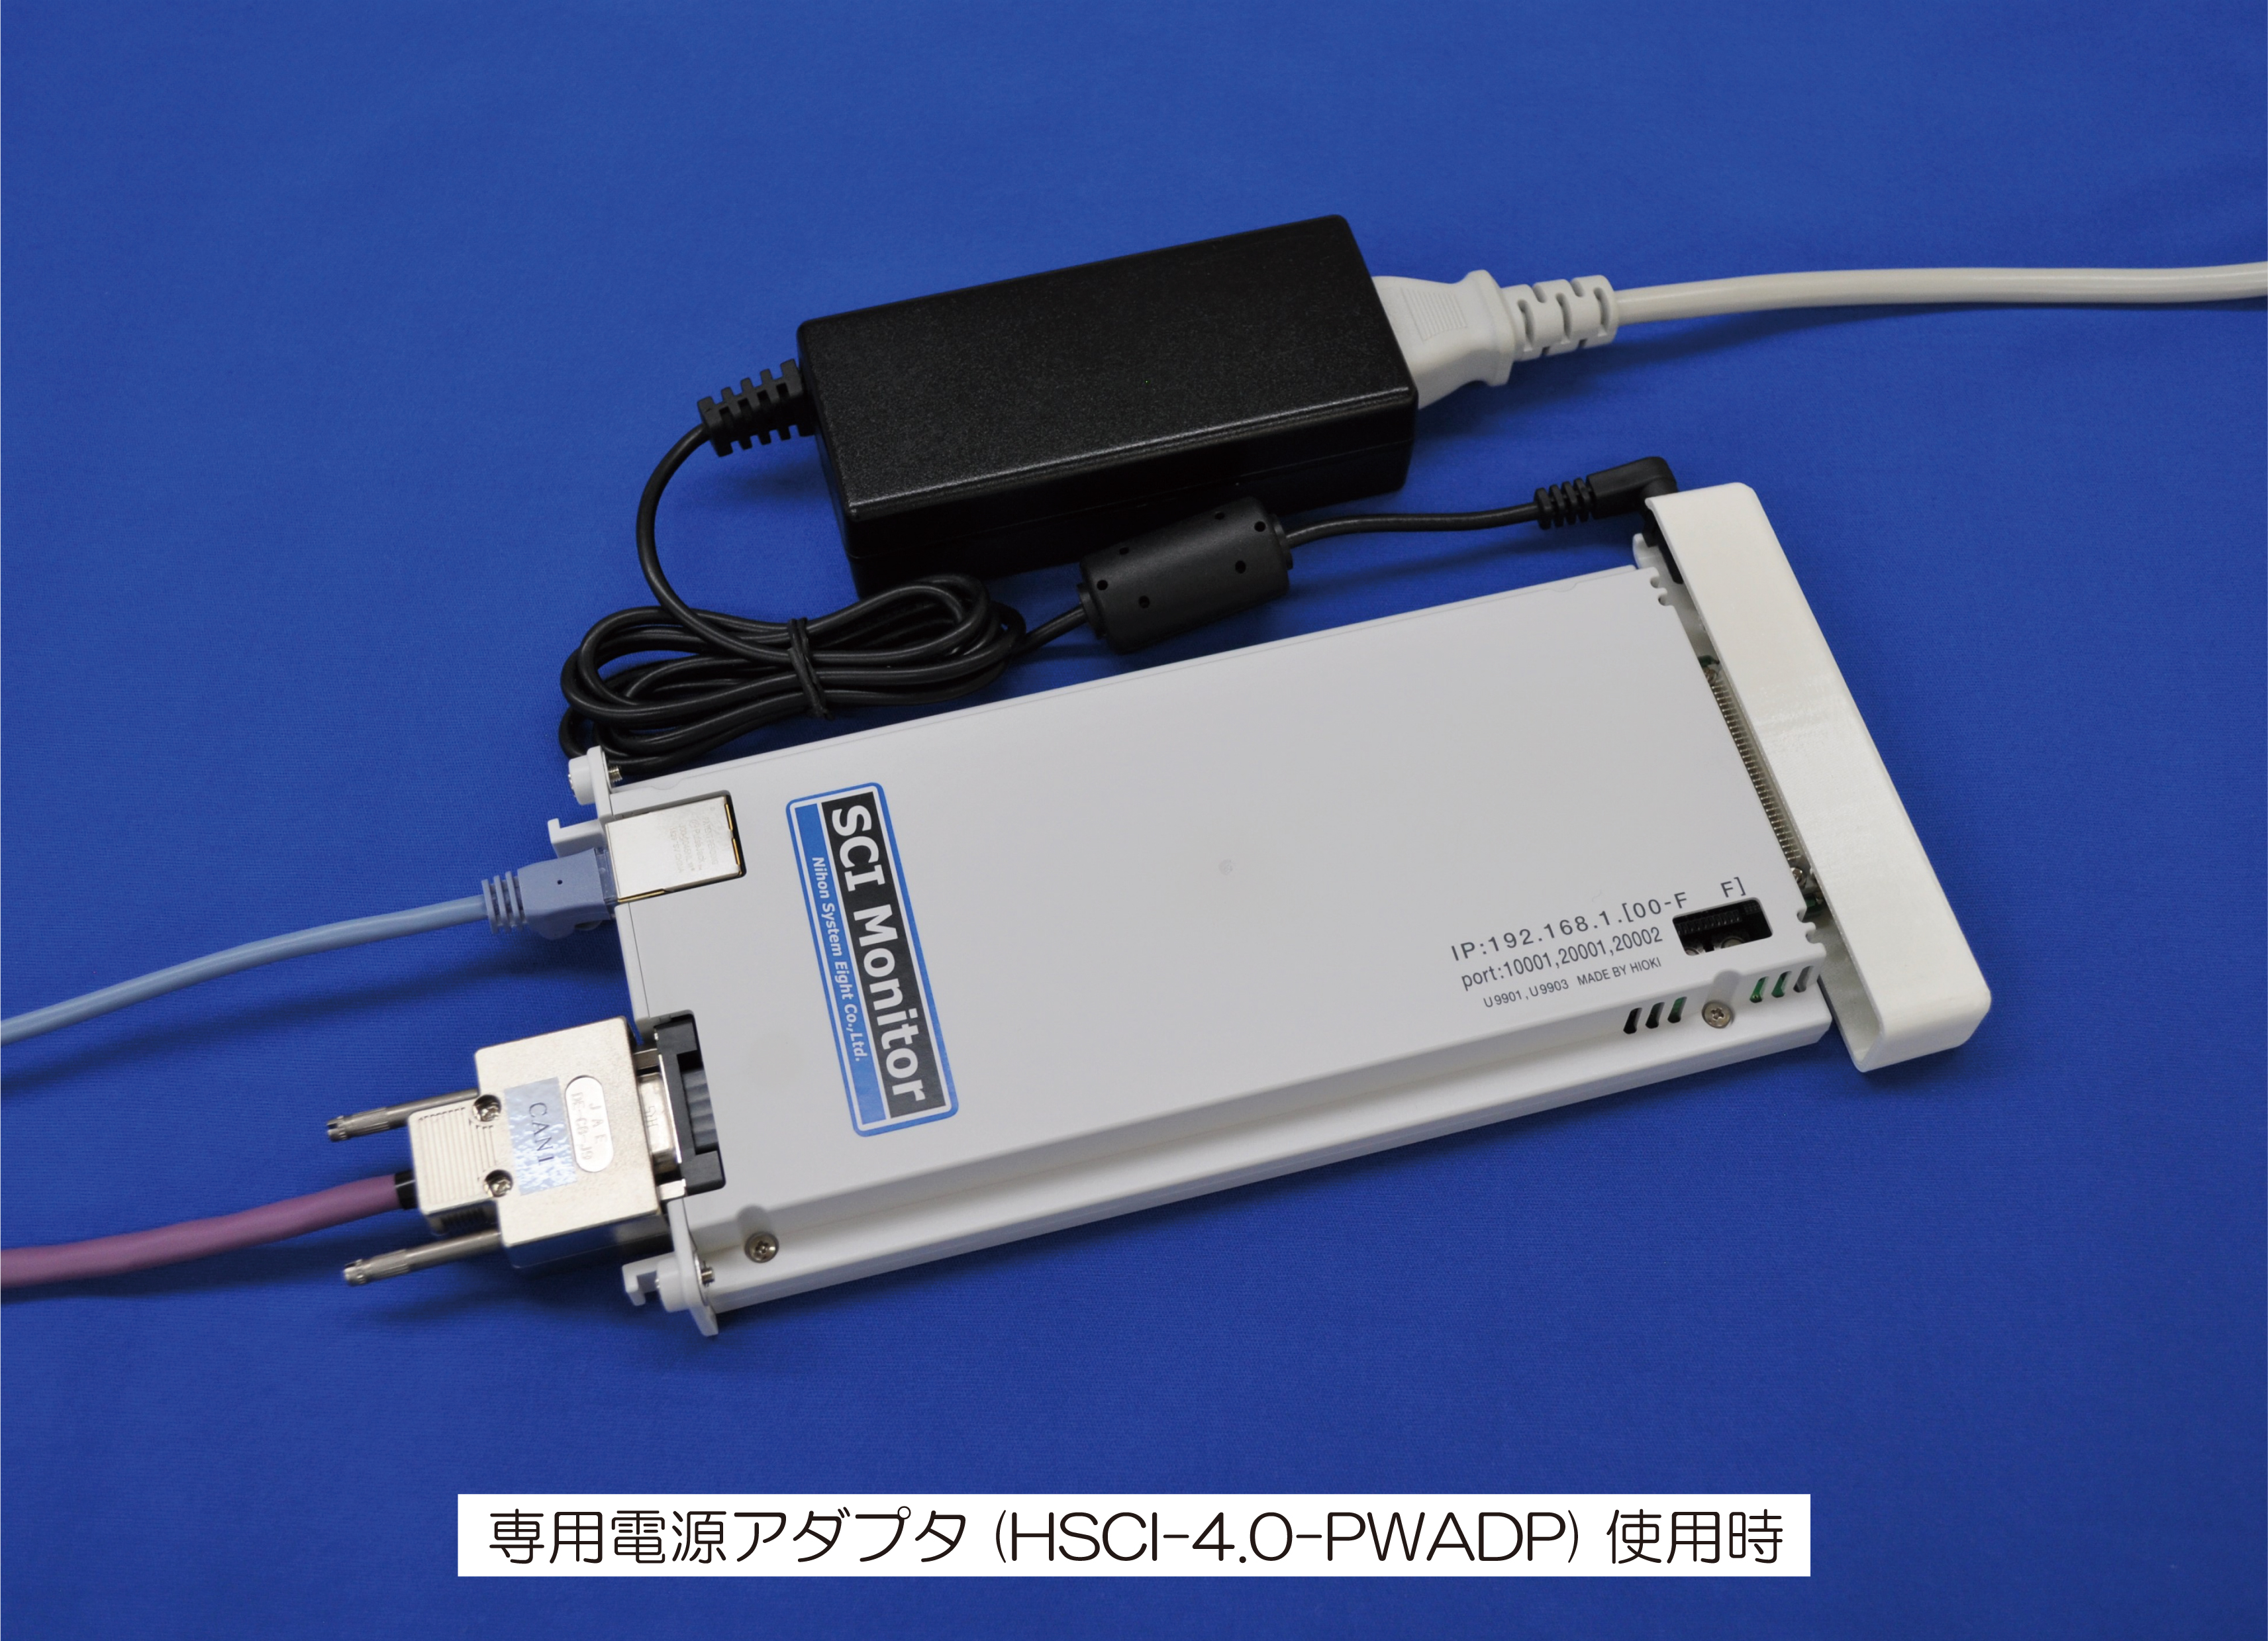 Using dedicated power adapter (HSCI-4.0-PWADP)